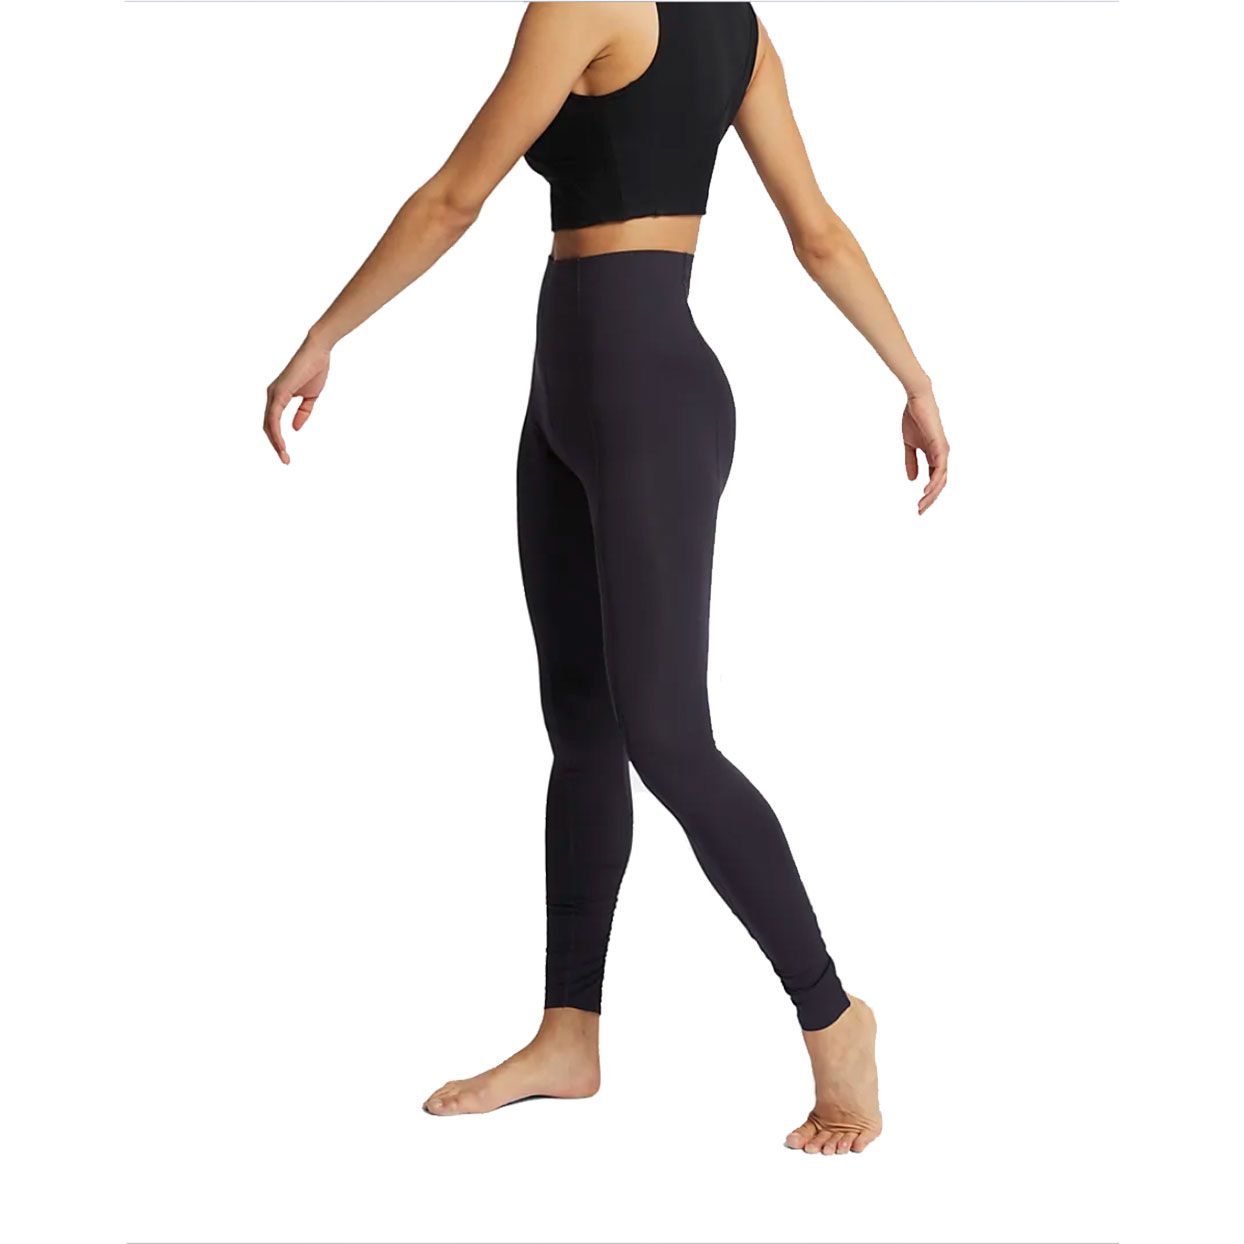 Kstare Women High Waist Dot Stripe Length Leggings Waisted Workout Sport Tummy Control Slim Fit Yoga Pants 